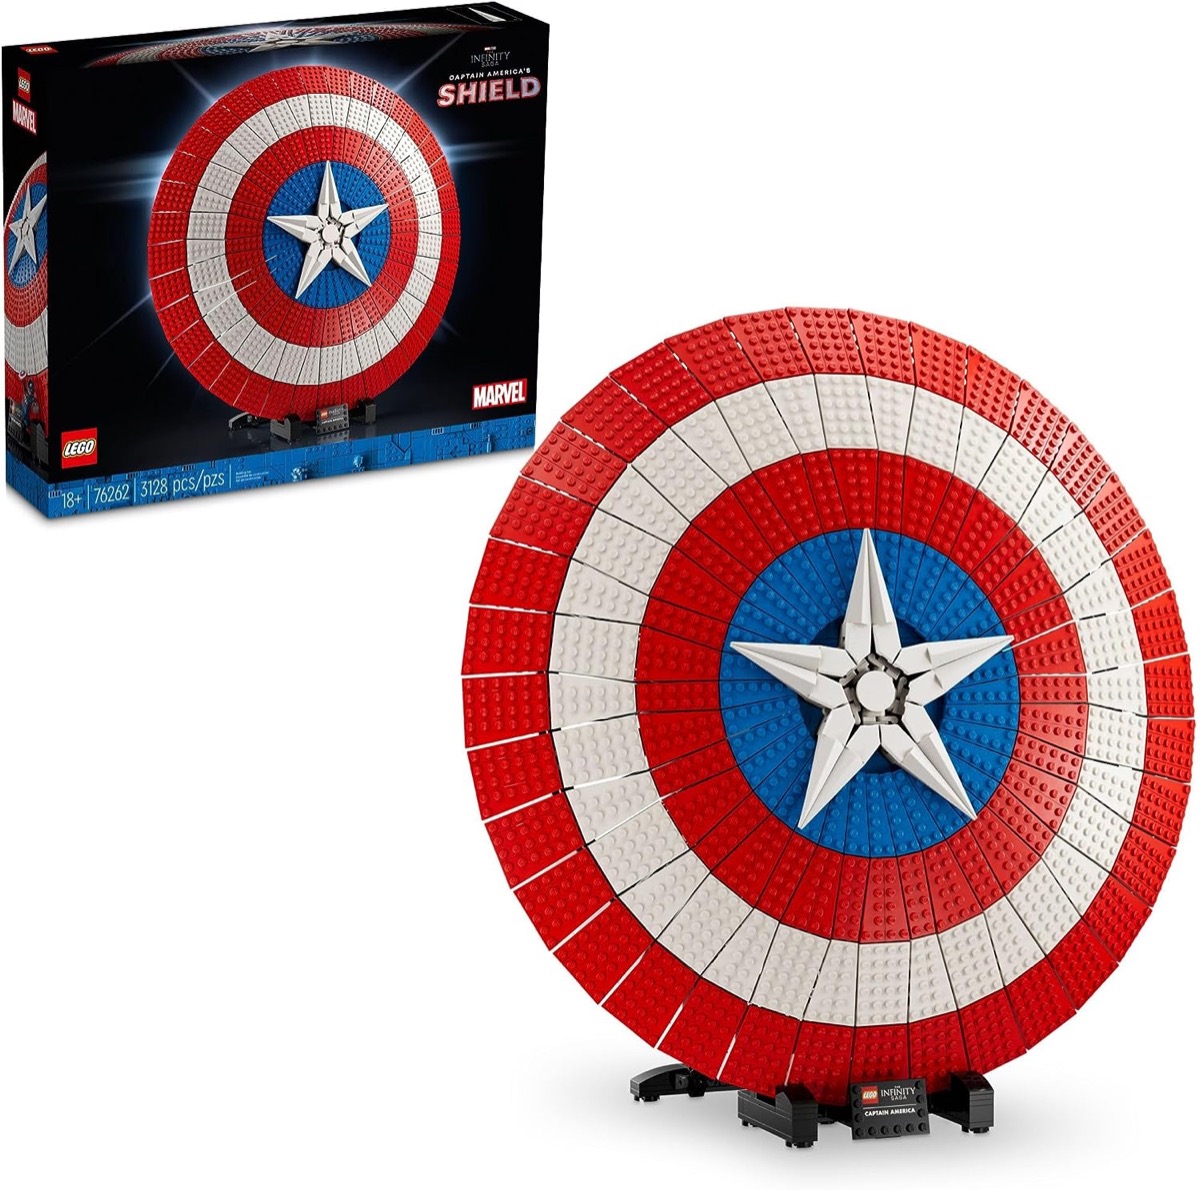 A LEGO version of Captain America's shield 